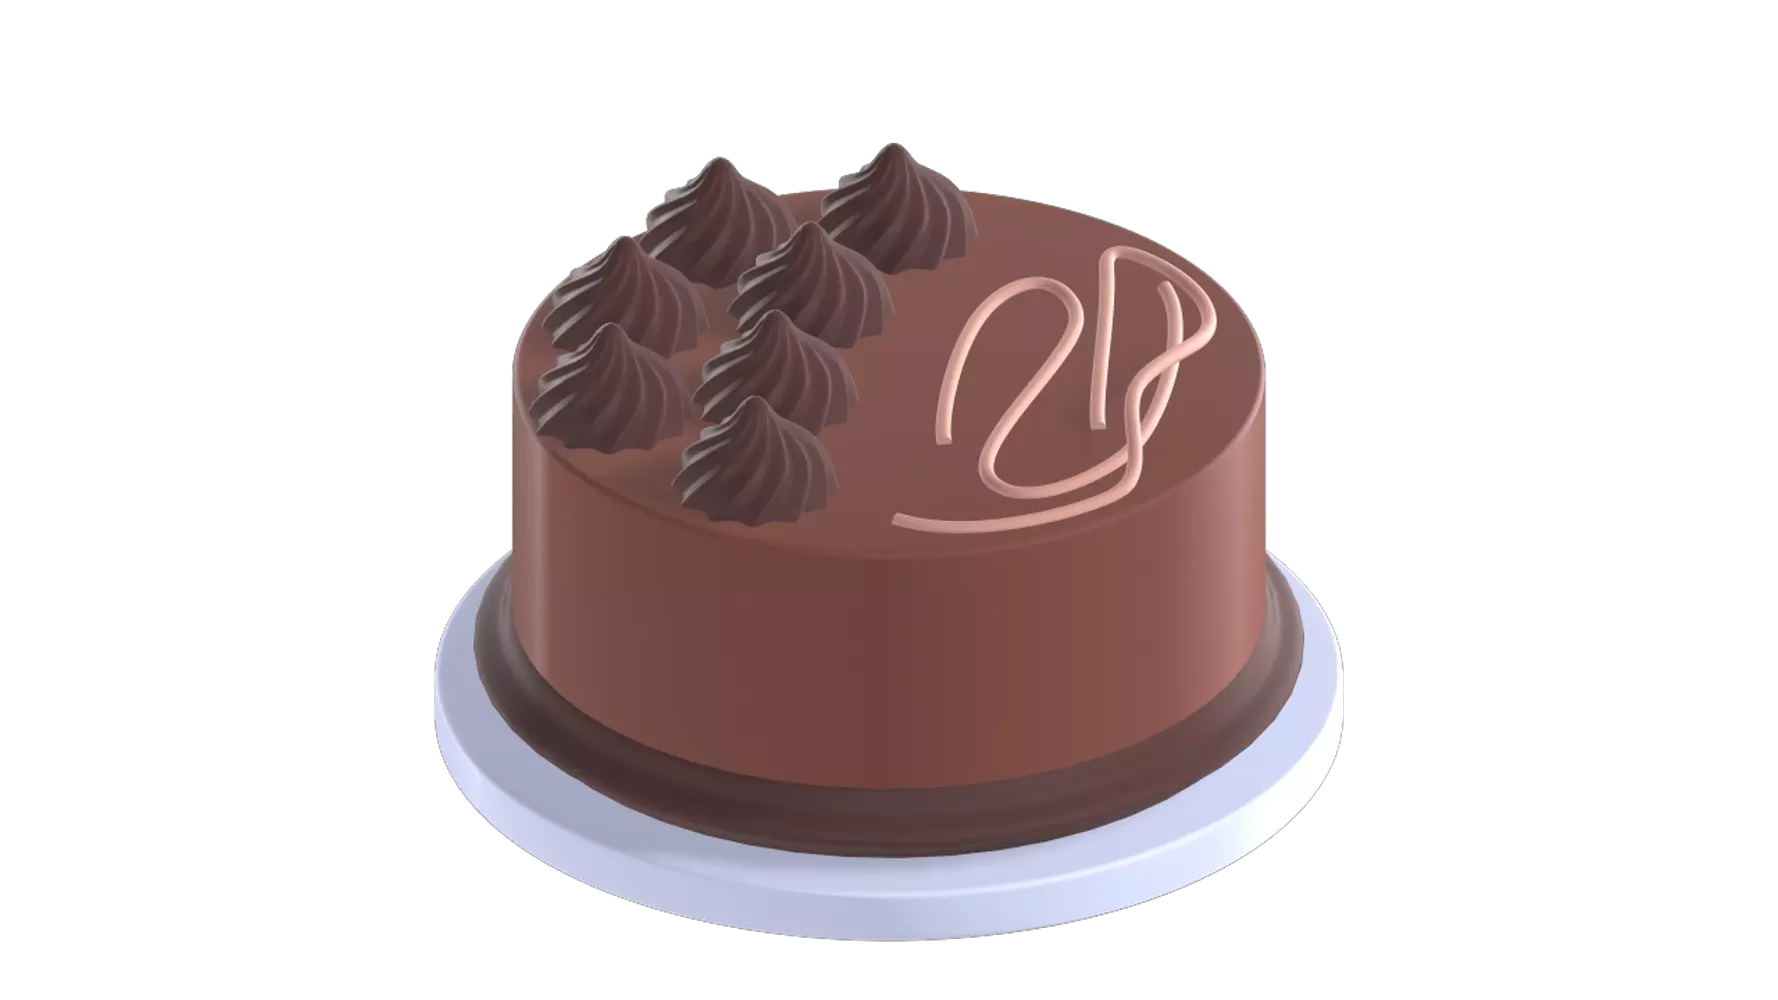 Cake With Chocolate Cream 3D Graphic